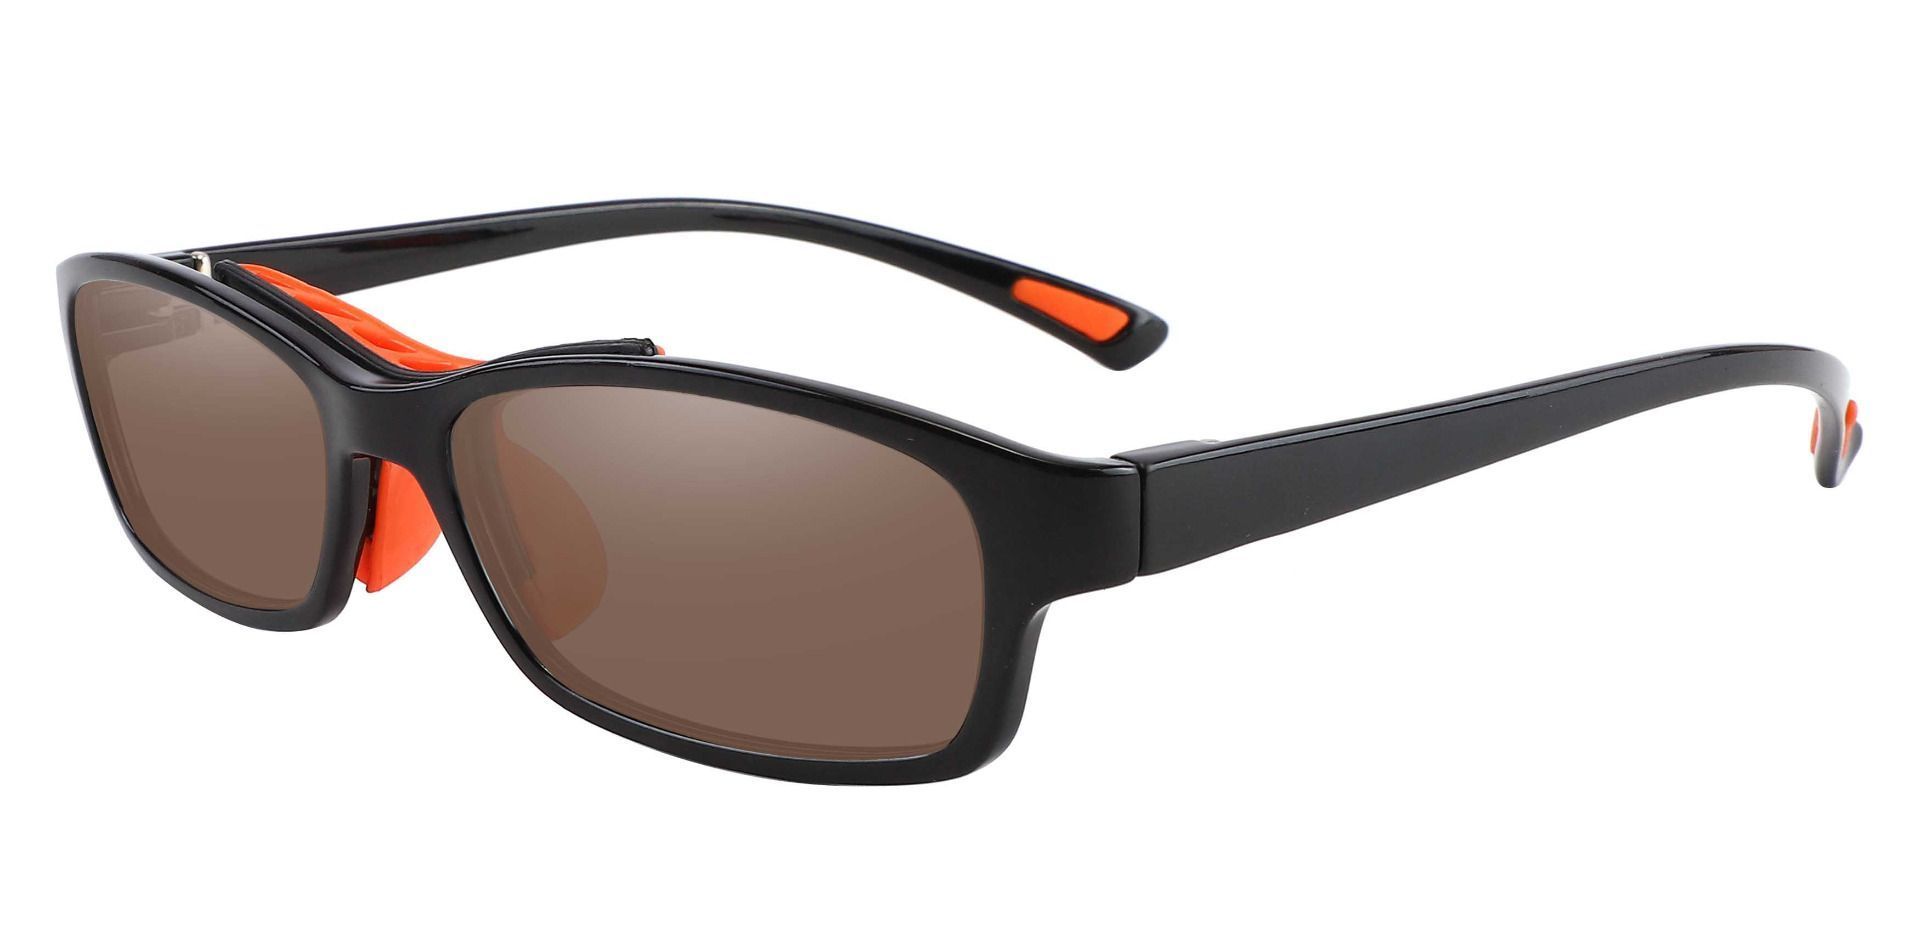 Glynn Rectangle Lined Bifocal Sunglasses - Black Frame With Brown Lenses